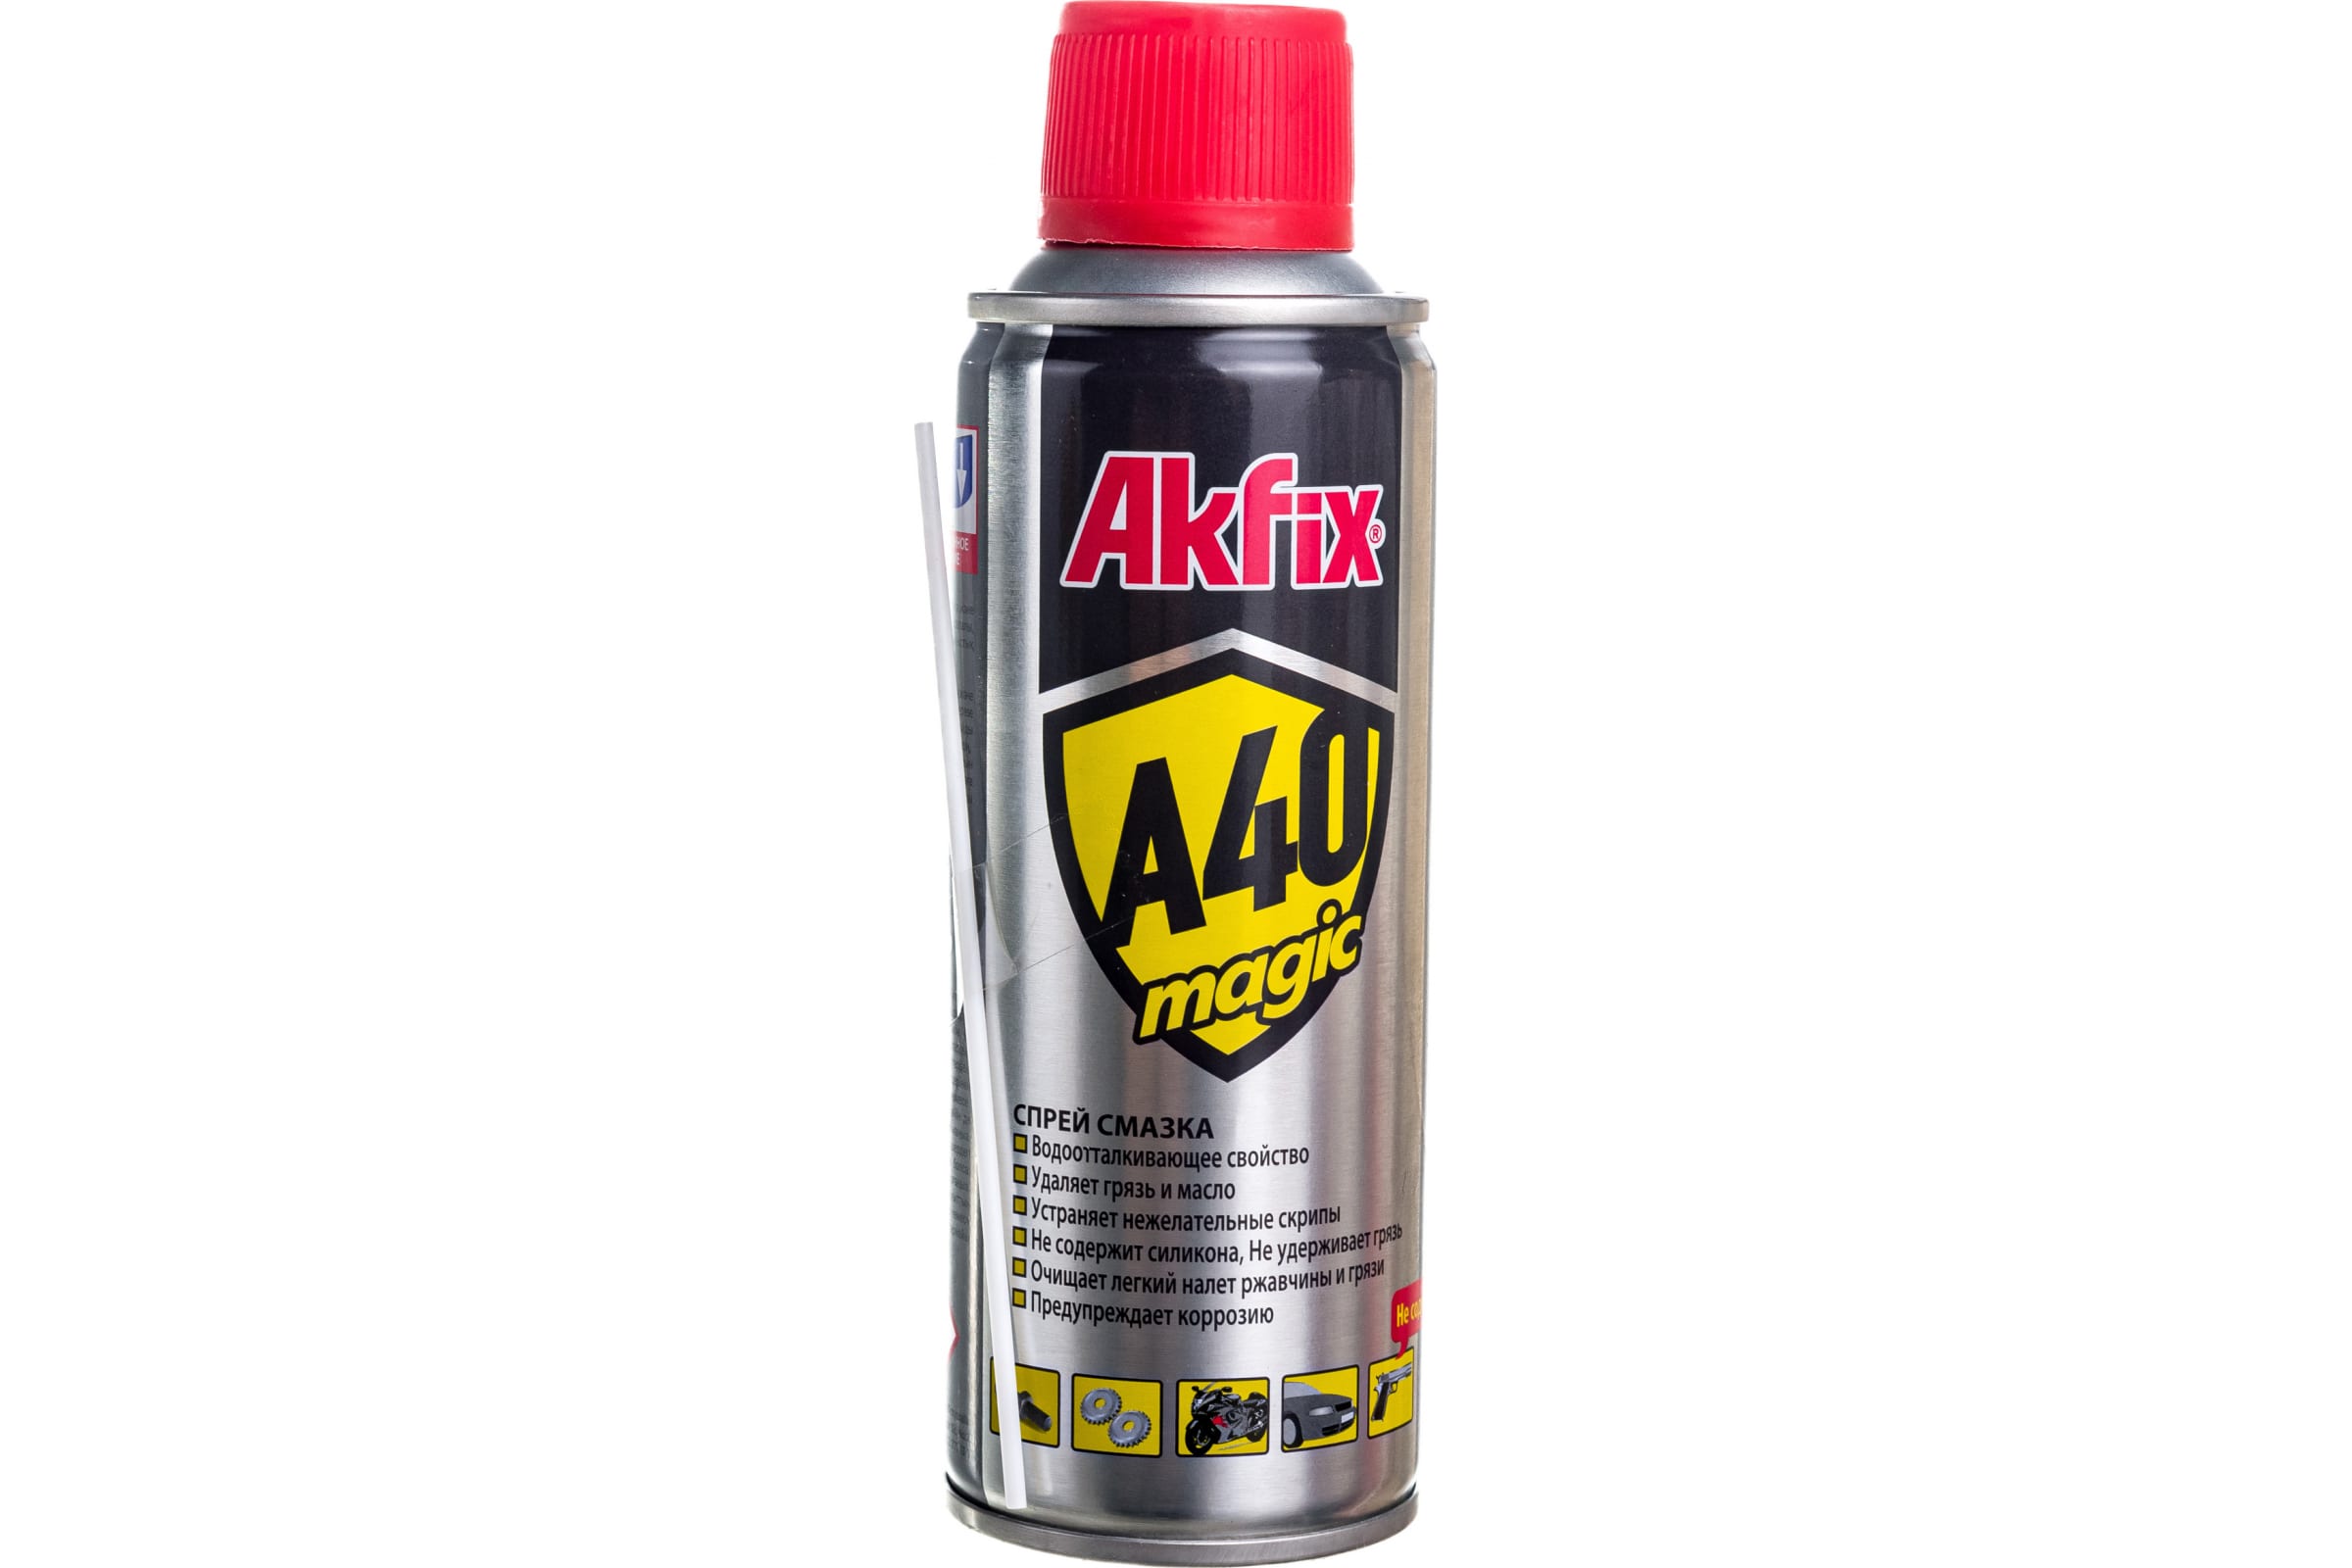 Akfix Универсальная смазка A40 Magic, 200 мл YA420 универсальная литиевая смазка efele